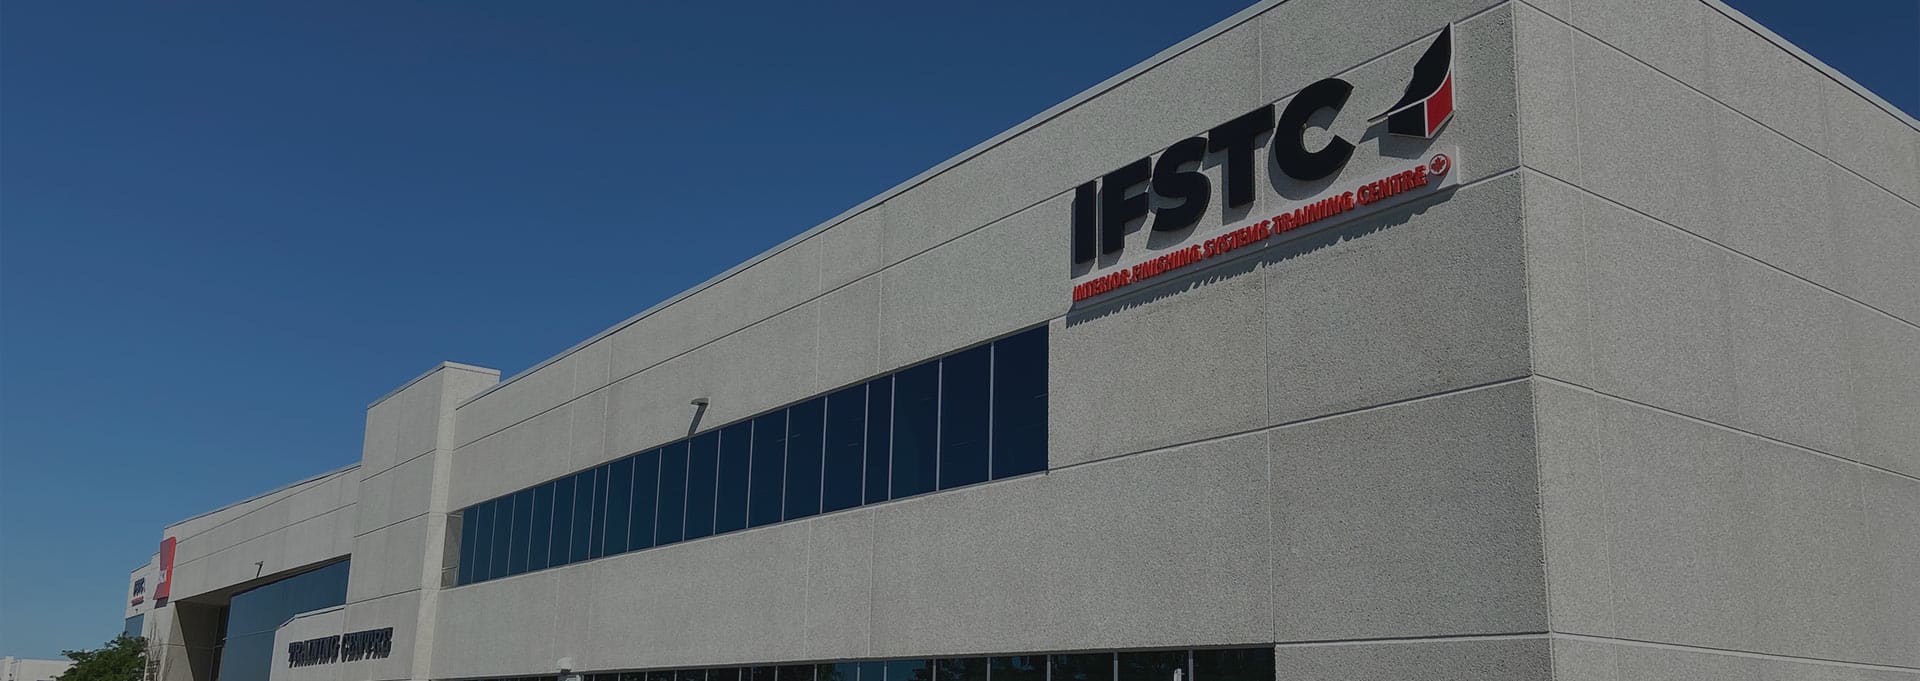 ifstc-logo-building